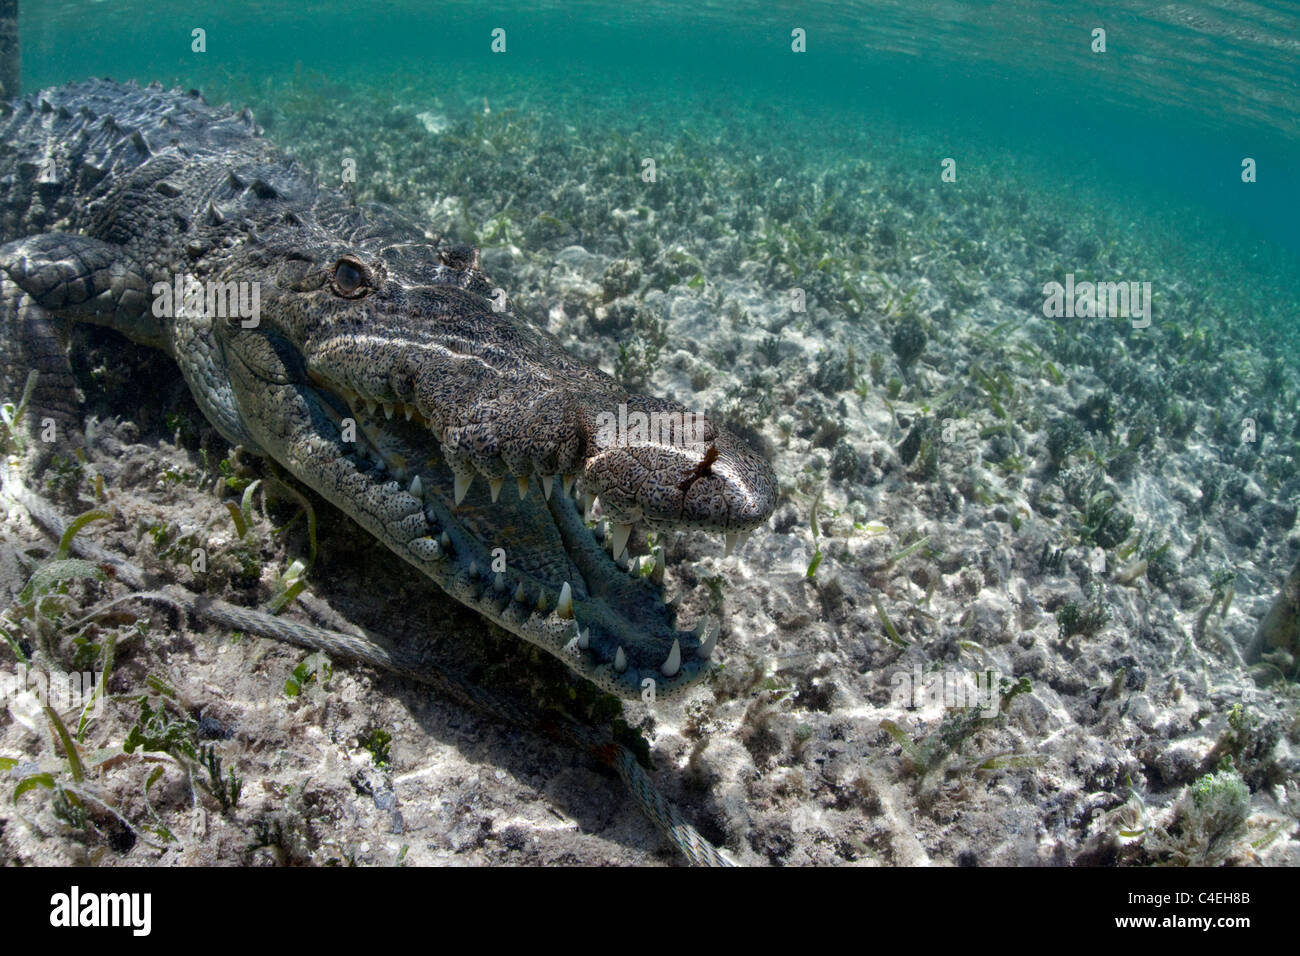 Underwater with a 9-foot long Cuban Crocodile in Cuba. Stock Photo